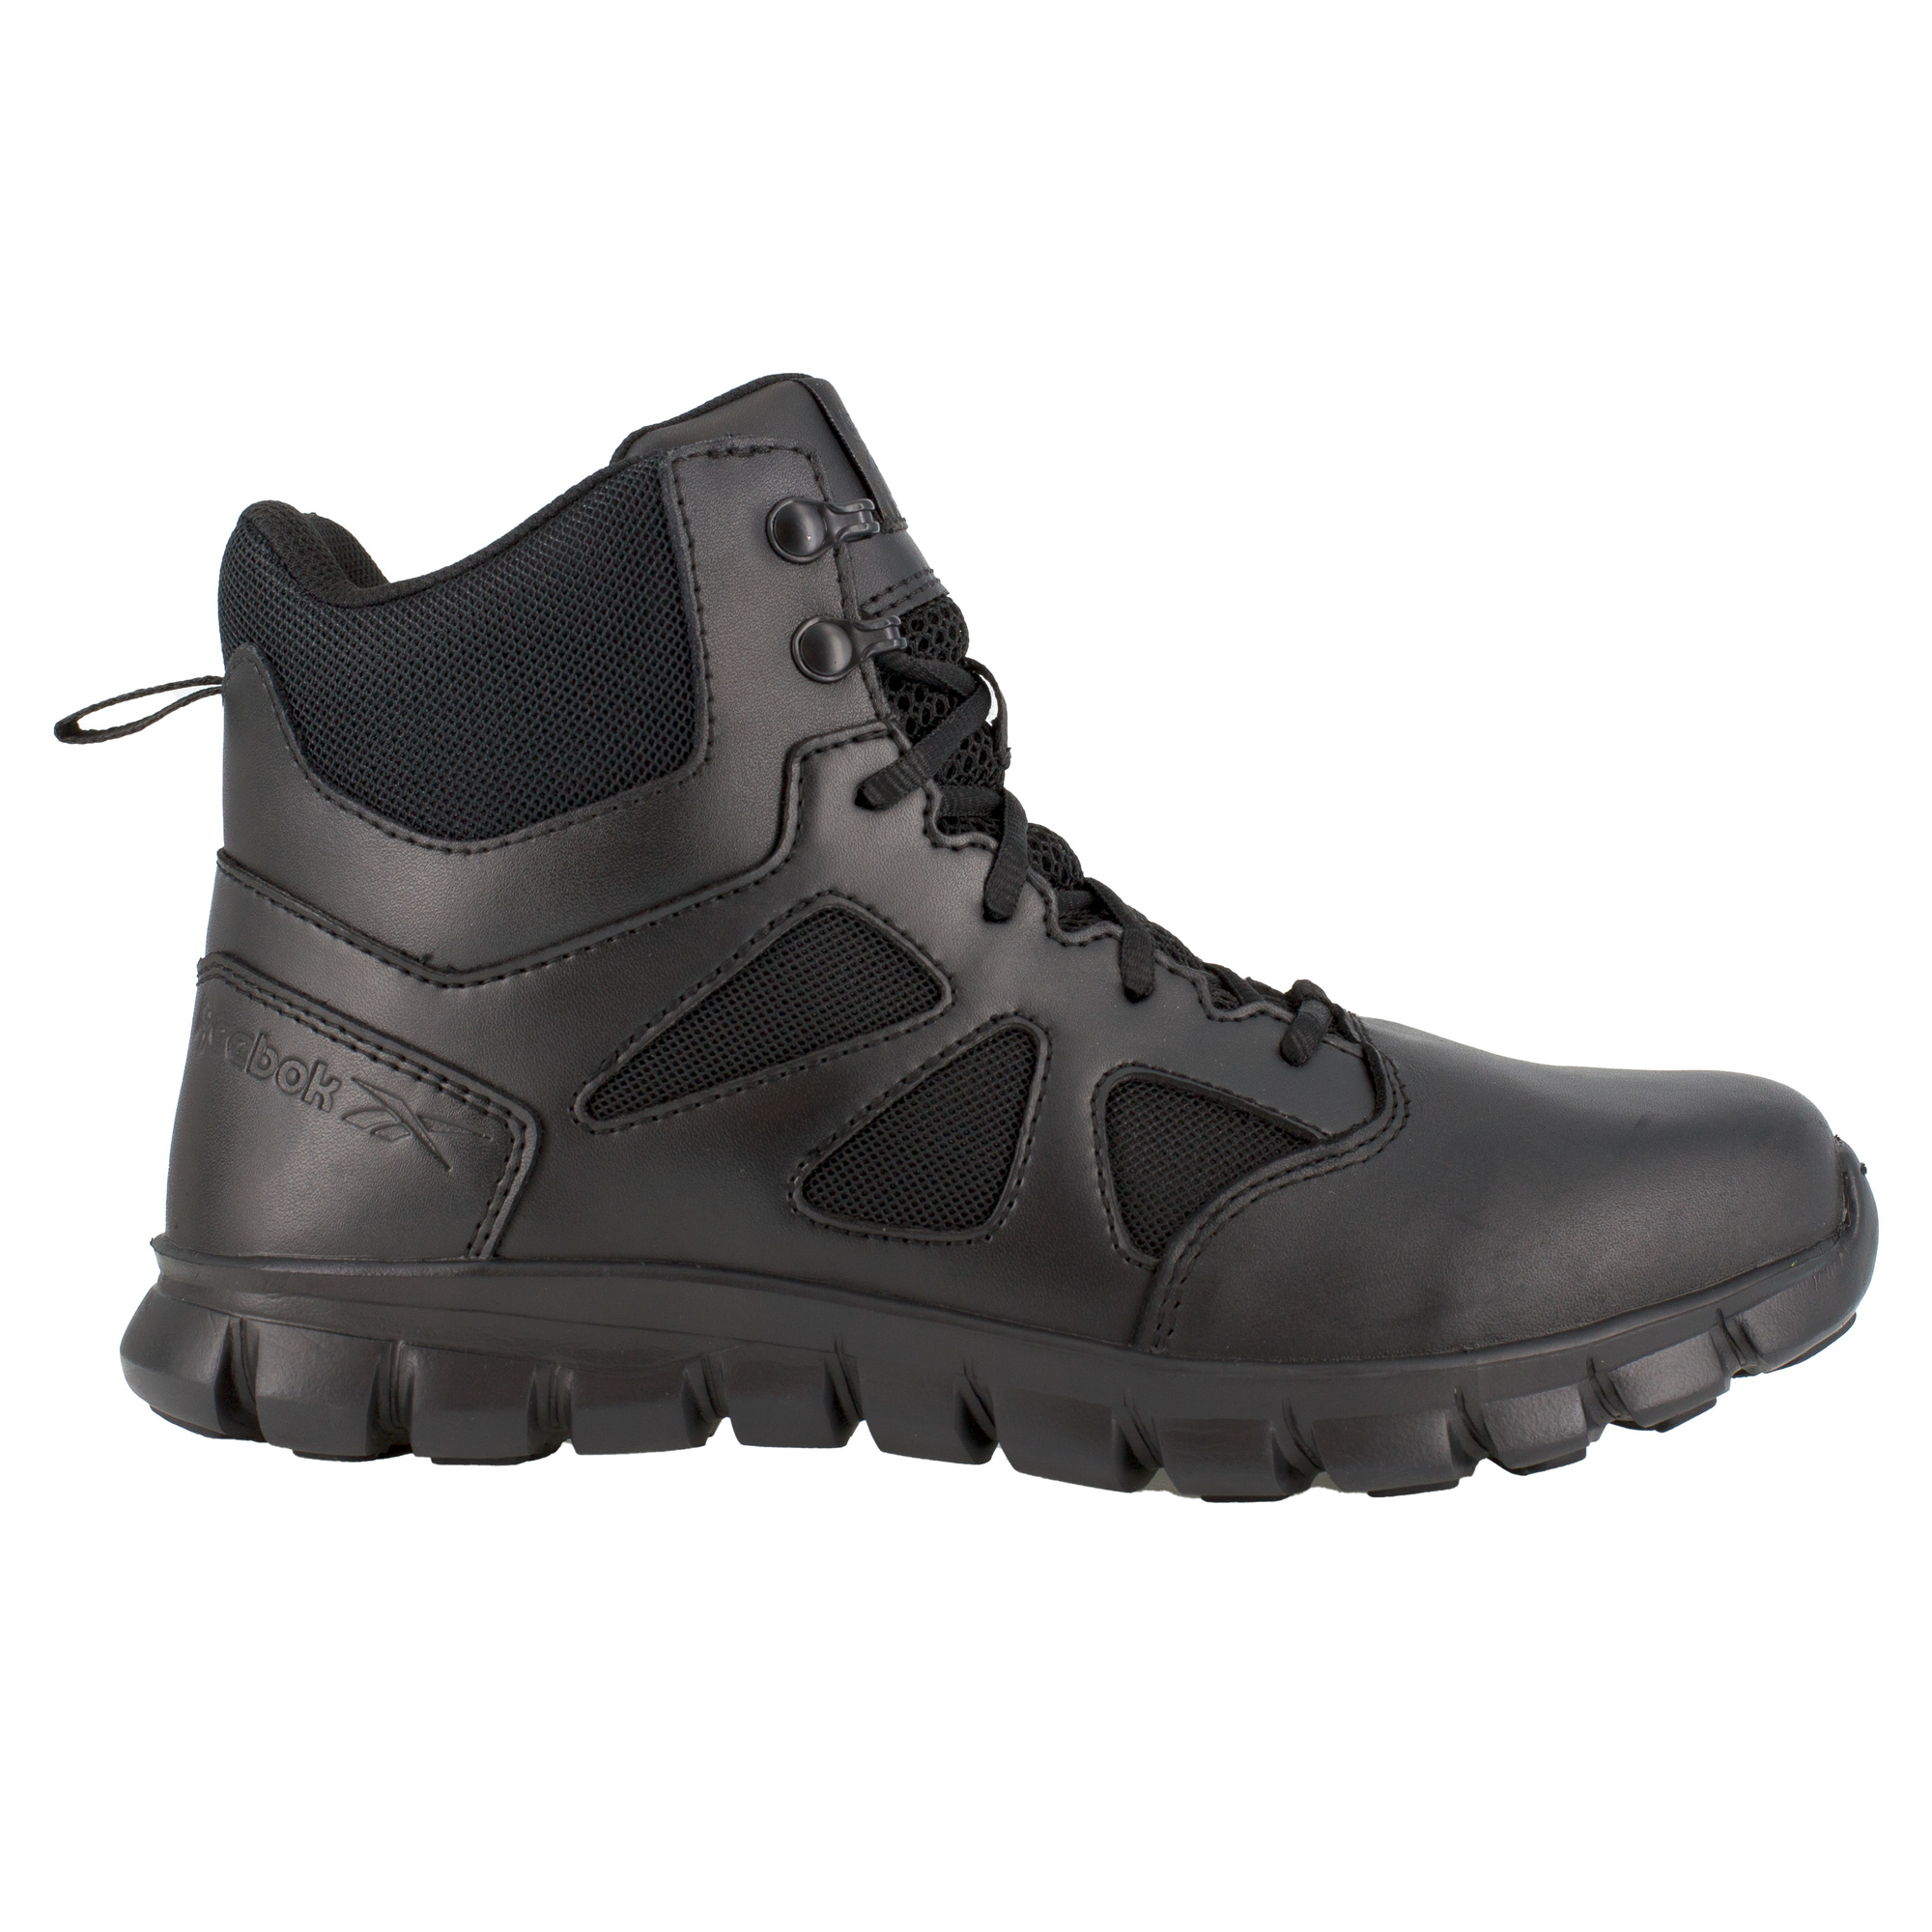 Reebok, 6Inch Tactical Boot w/Side Zipper, Size 8 1/2, Width Wide, Color Black, Model RB086